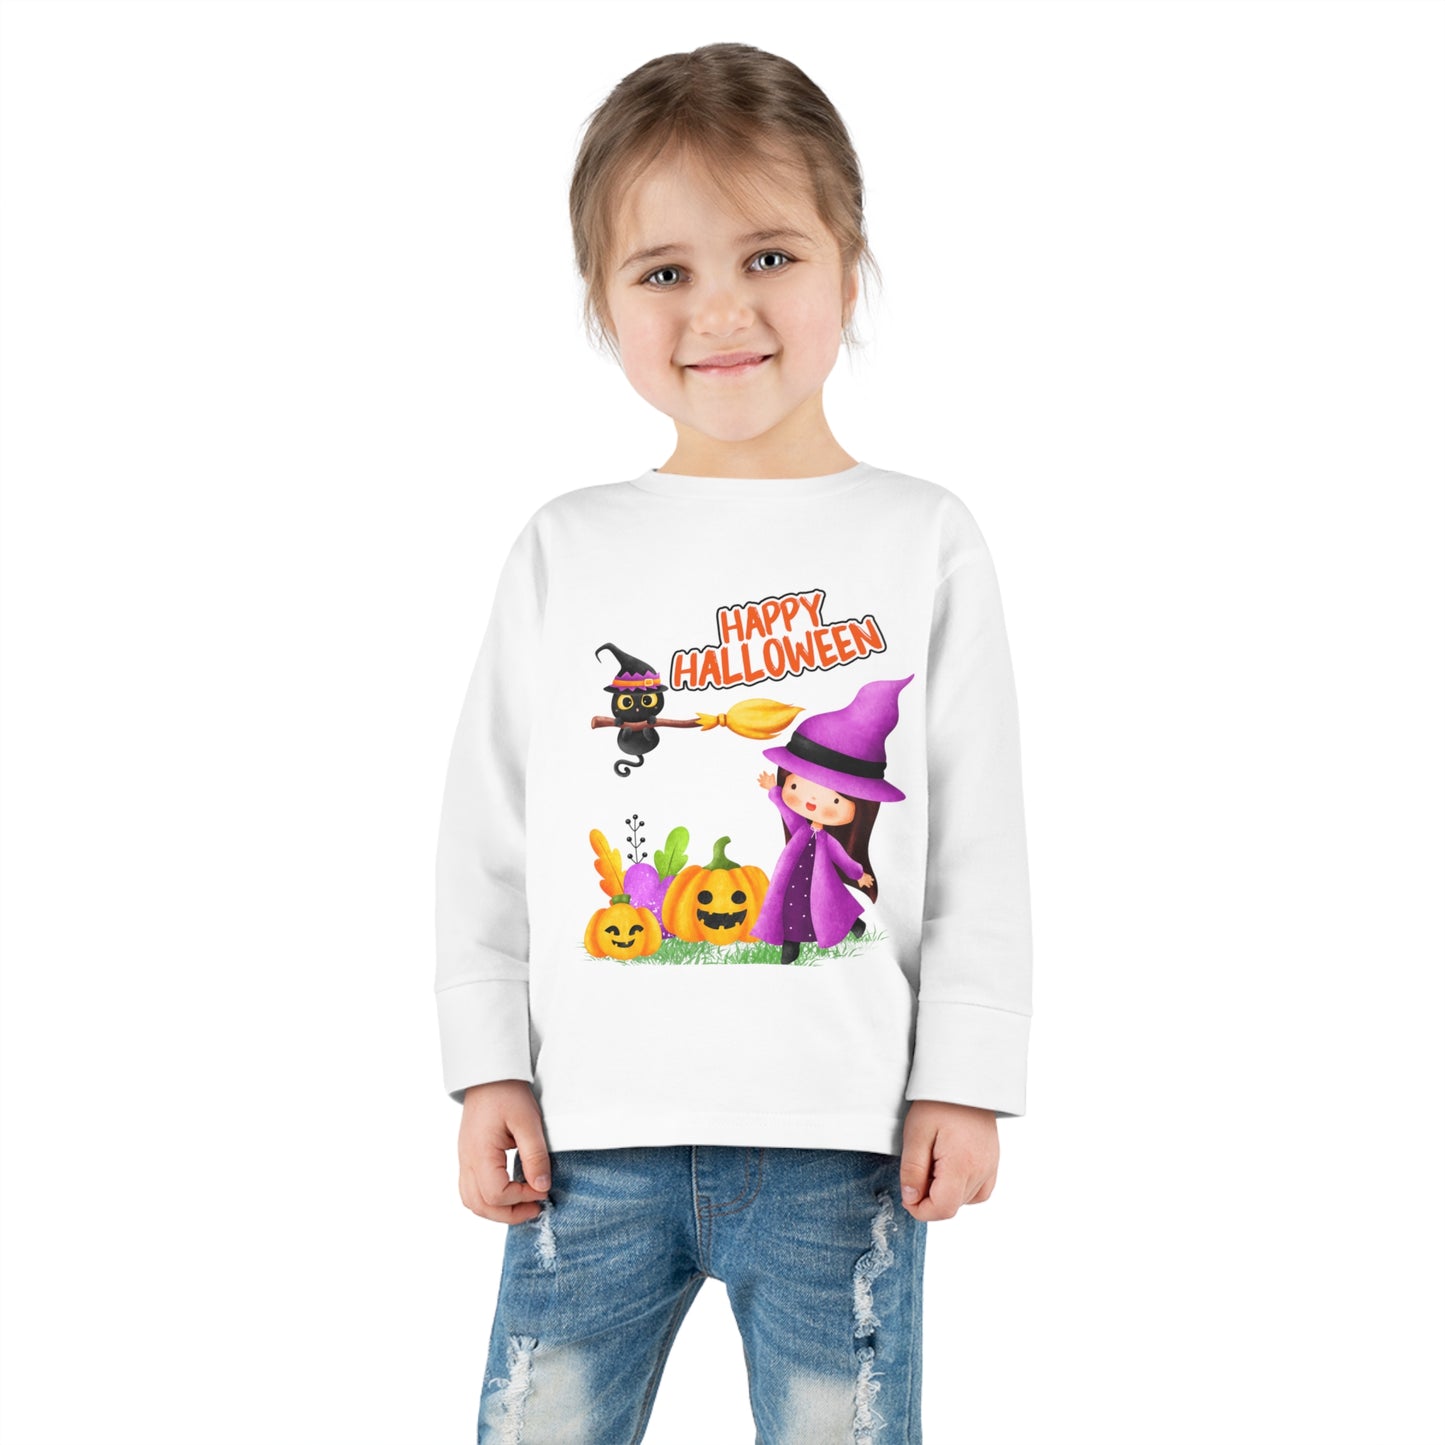 Camiseta de manga larga para niños pequeños - Halloween - Bruja joven - 02